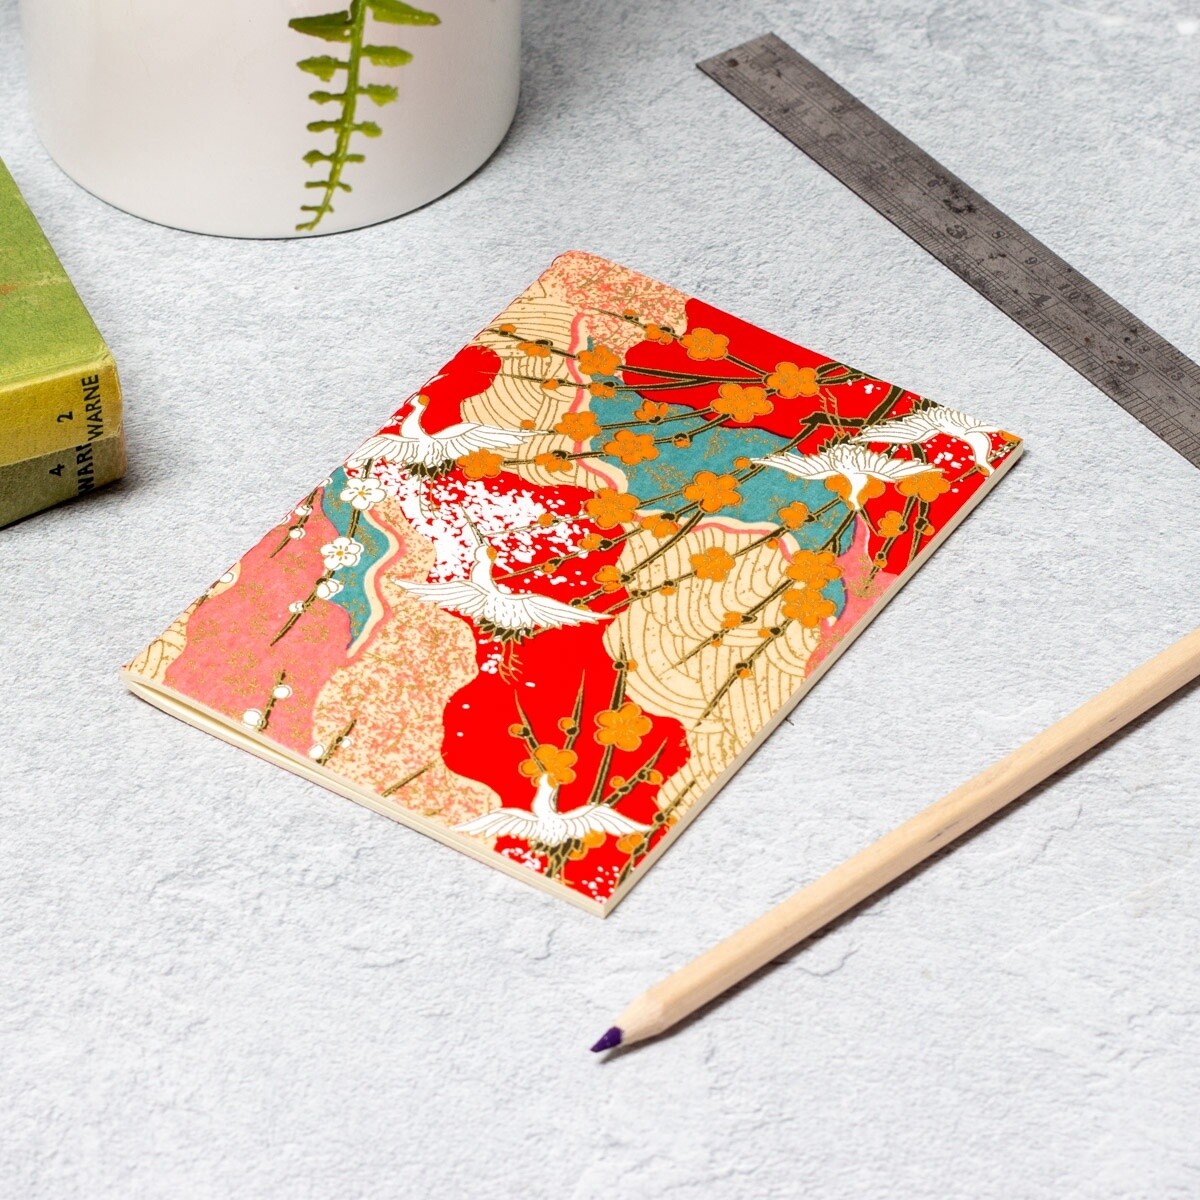 Essential Notebook - Cranes Collage/Red by Esmie